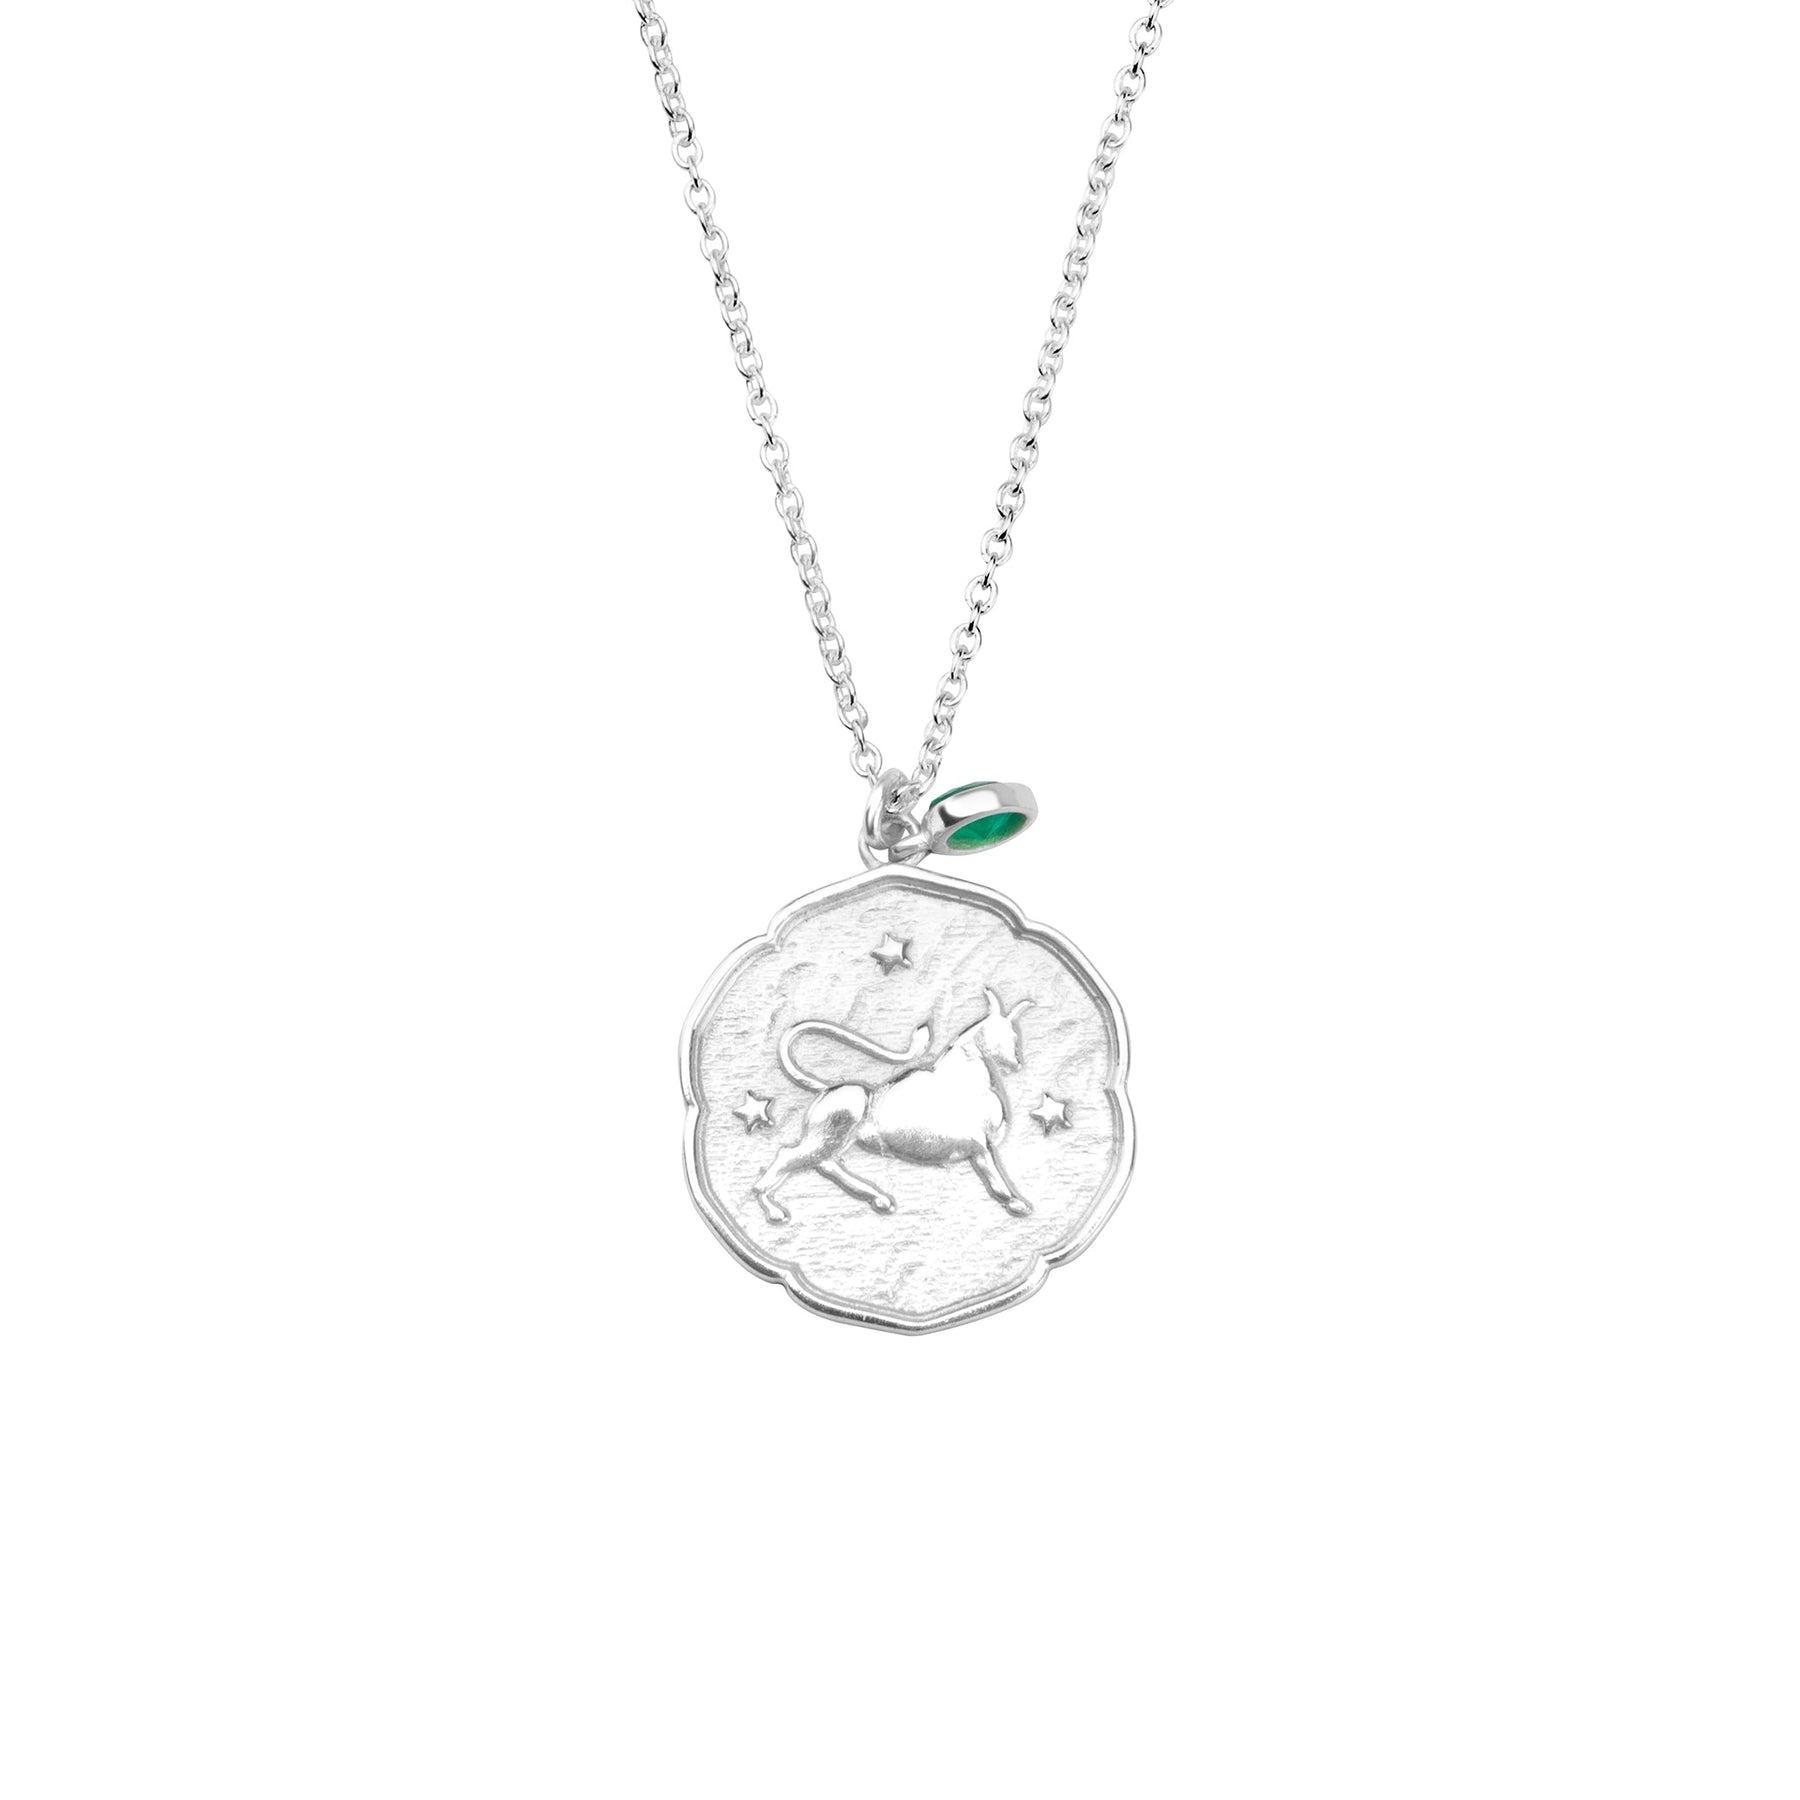 Taurus Necklace With Birth Stone Charm